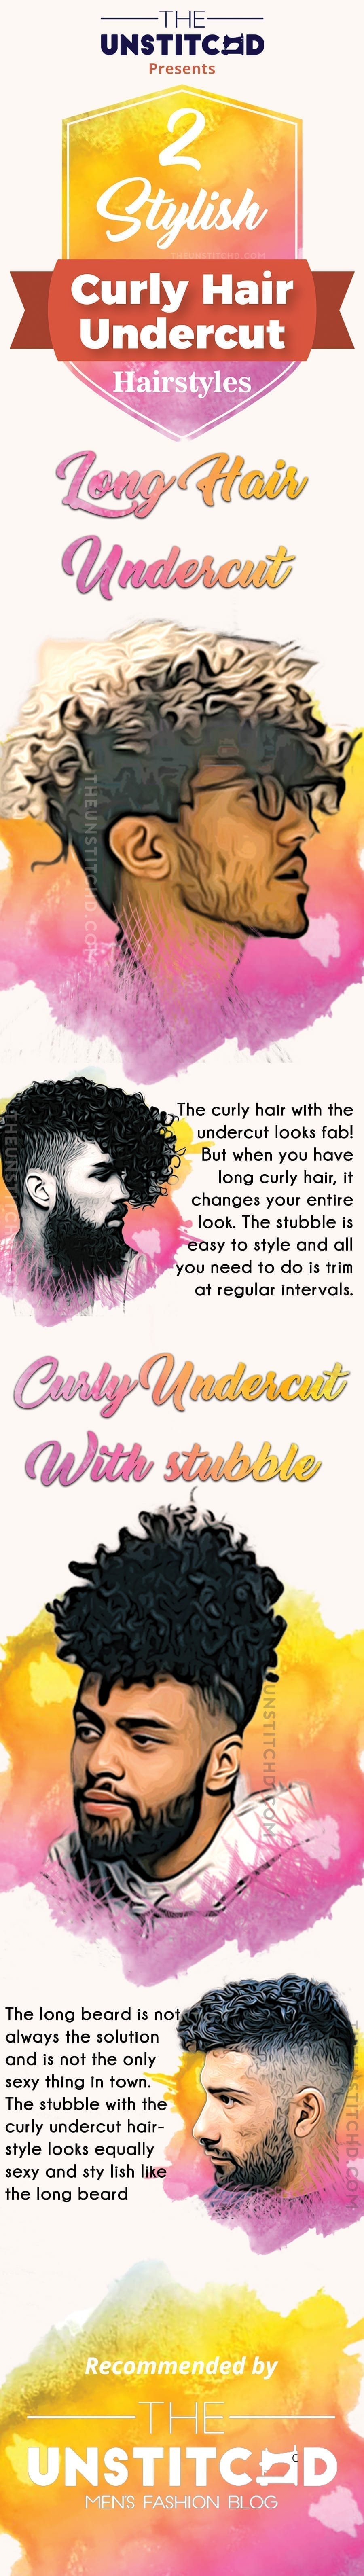 curly-hair-undercut-info